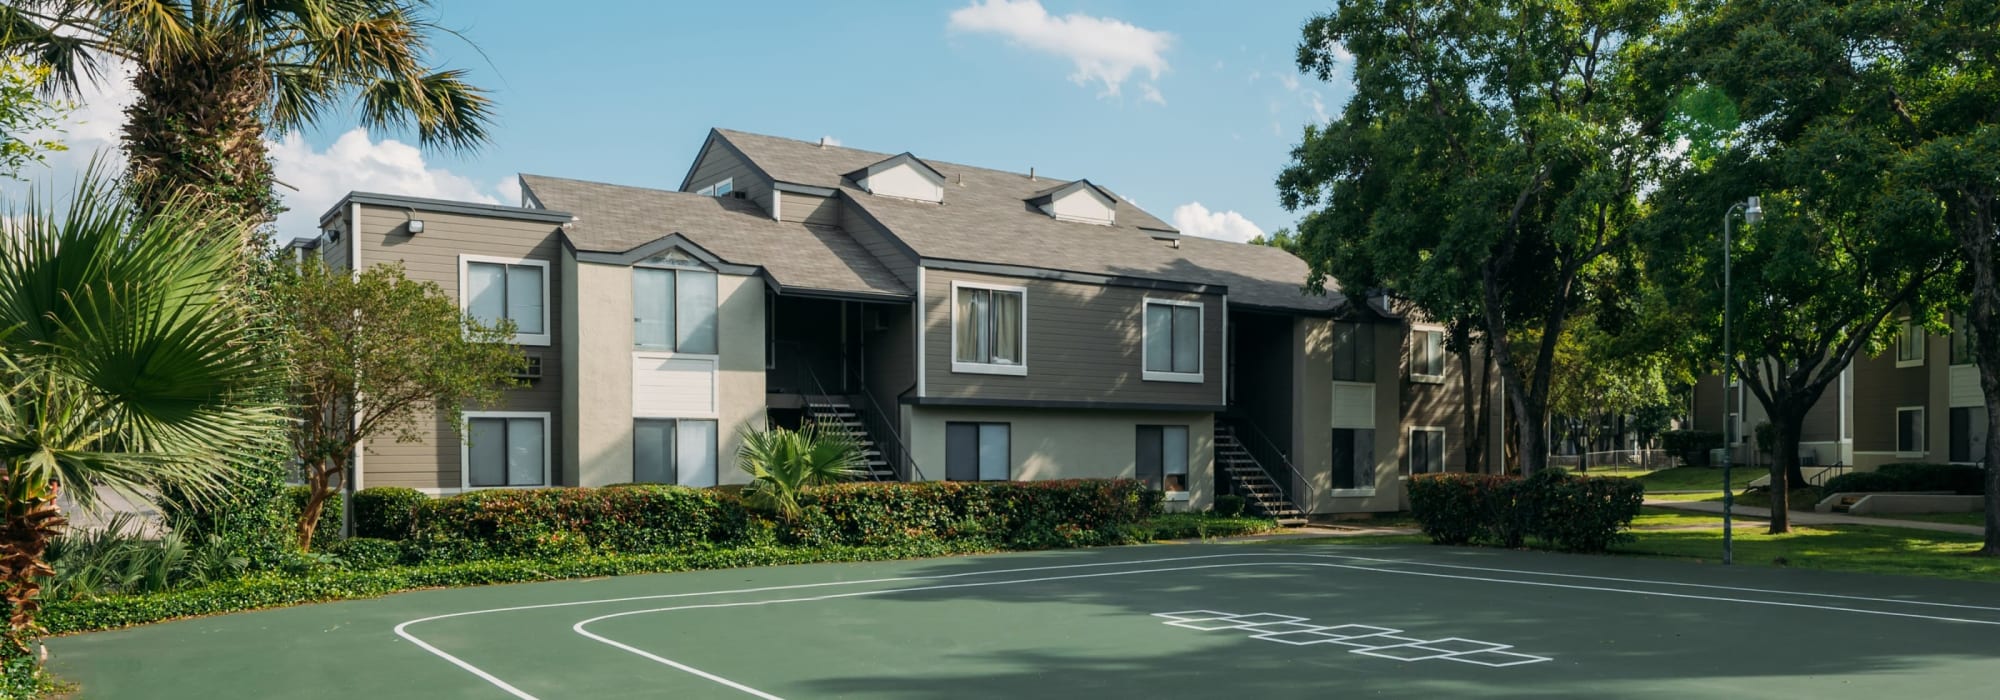 Basketball court at Park Vista Apartments in San Antonio, Texas